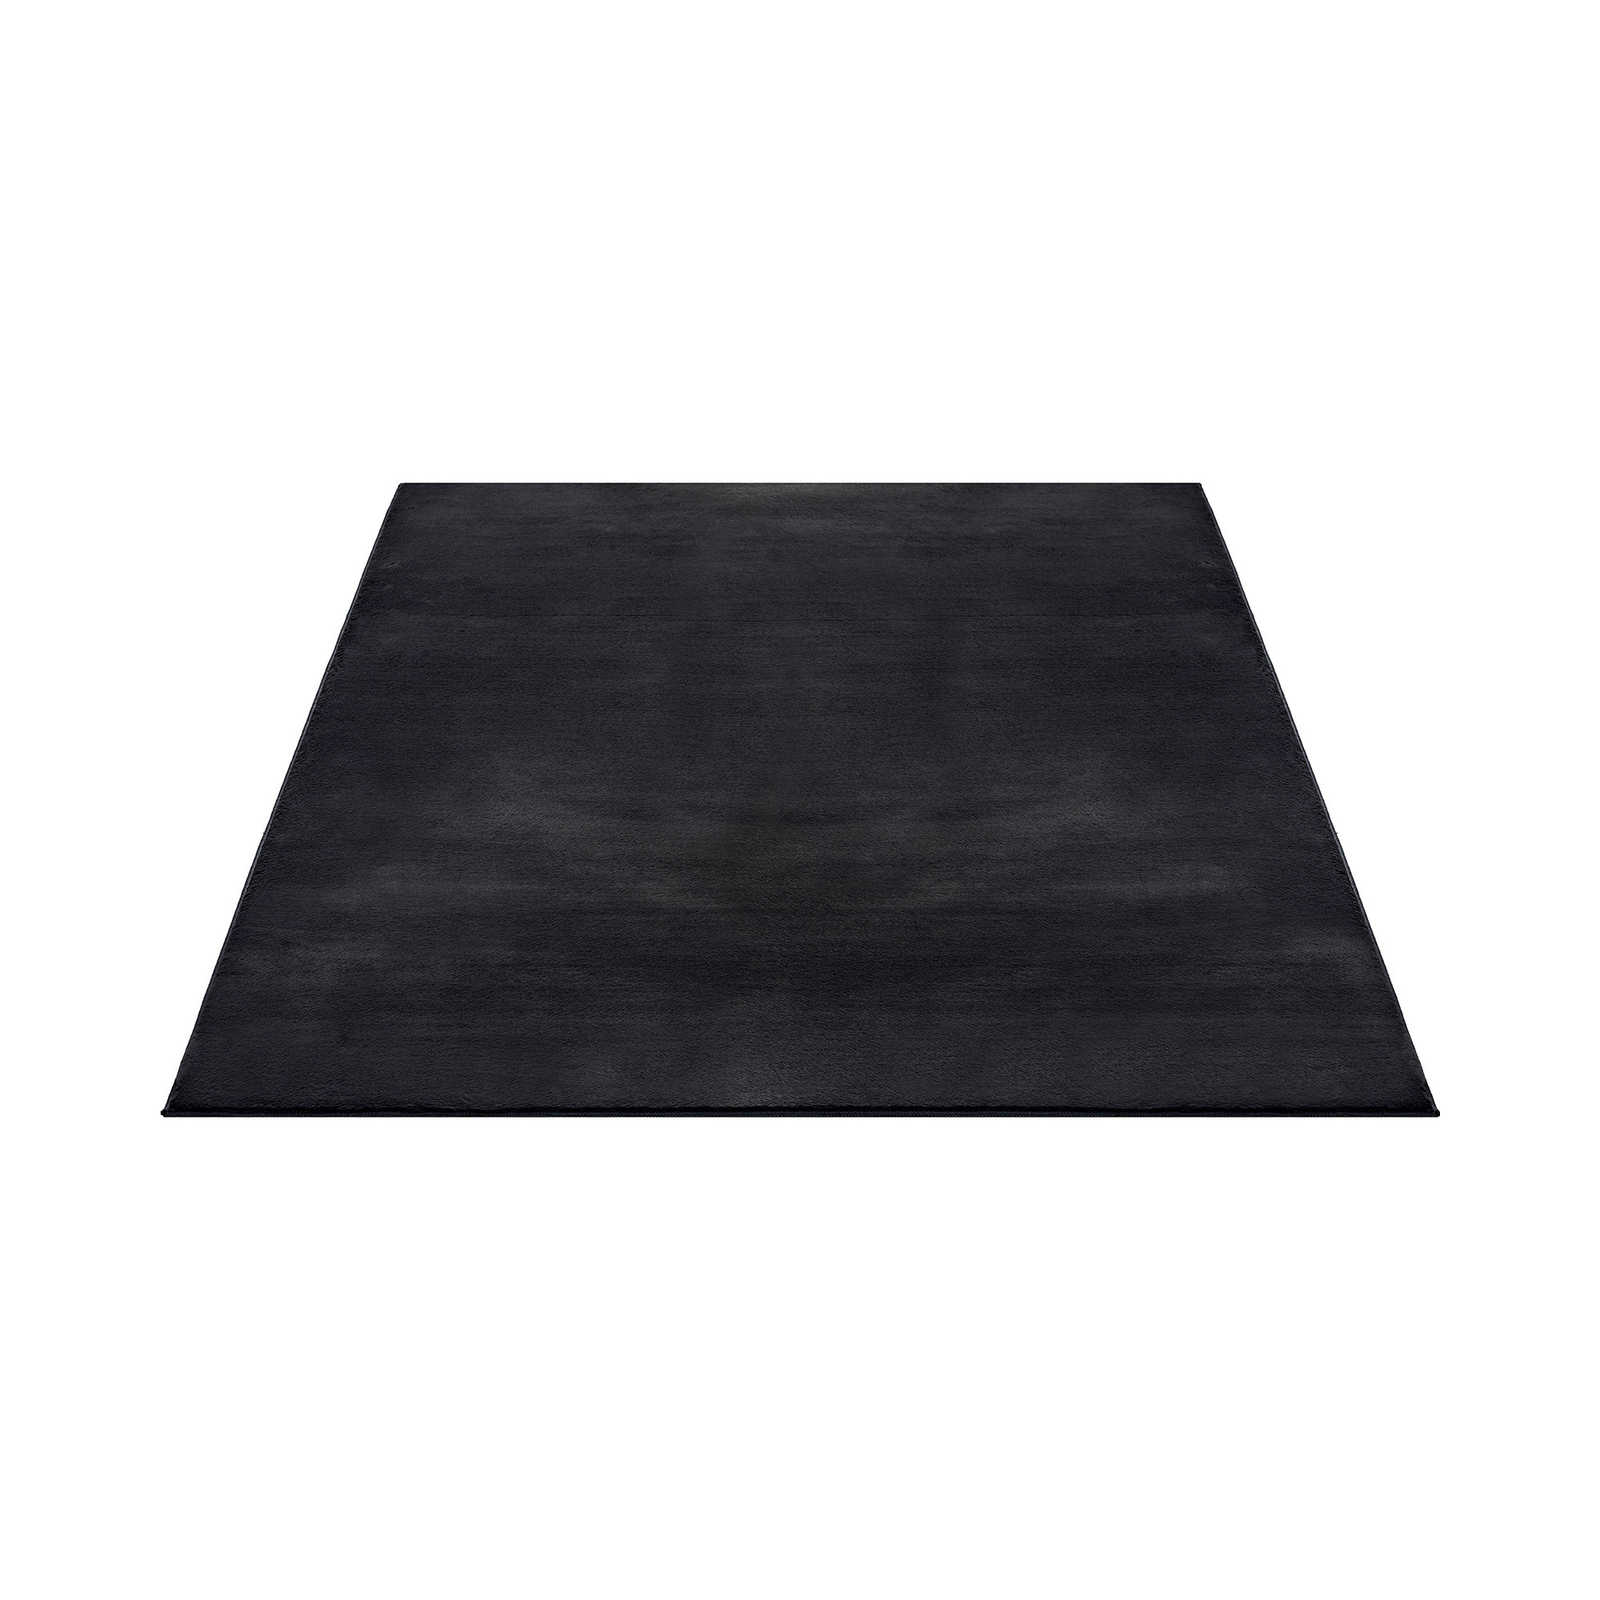 Knuffelzacht hoogpolig tapijt in zwart - 280 x 200 cm
